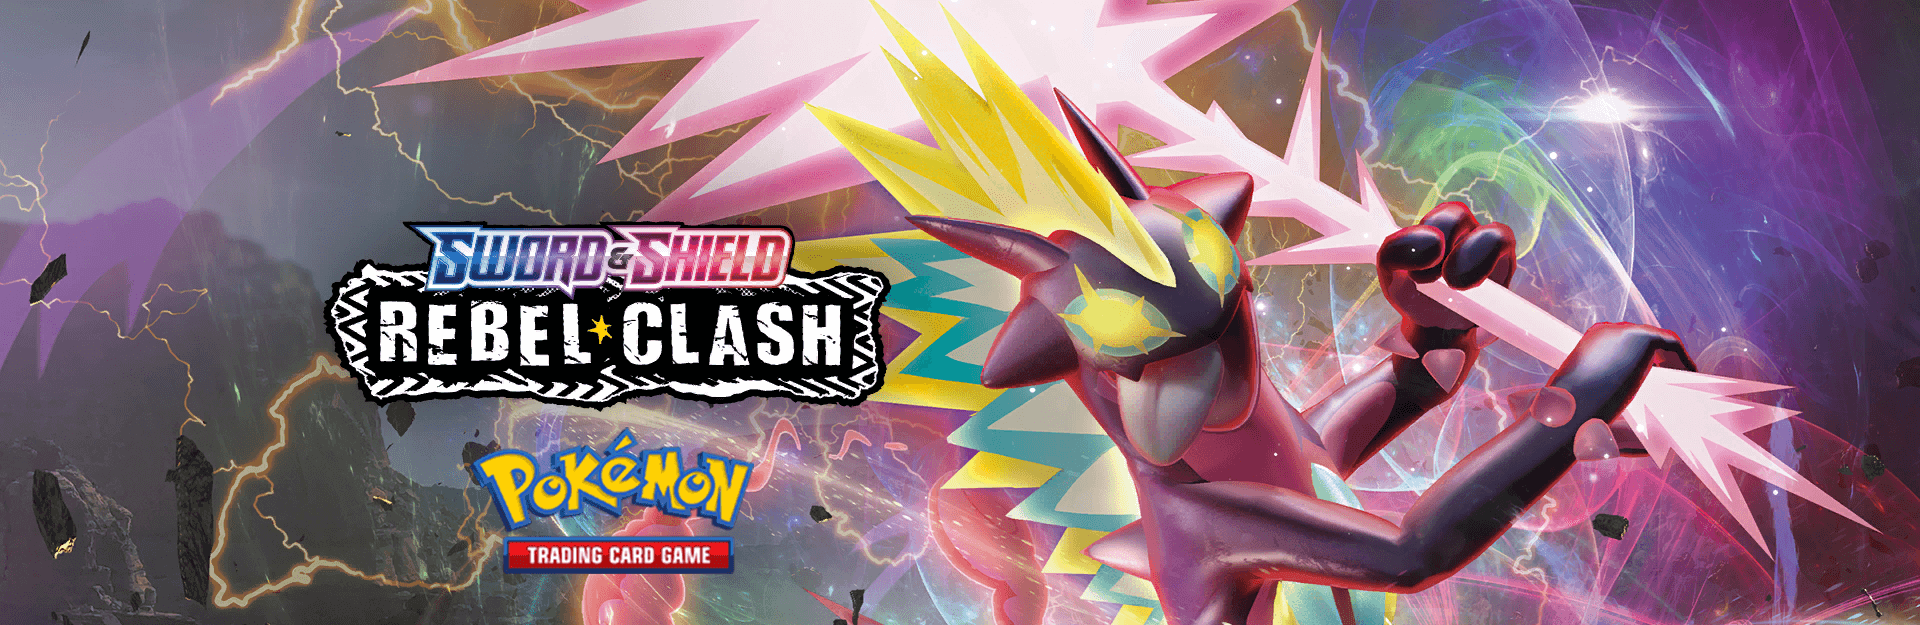 Pokémon TCG Sword & Shield Rebel Clash